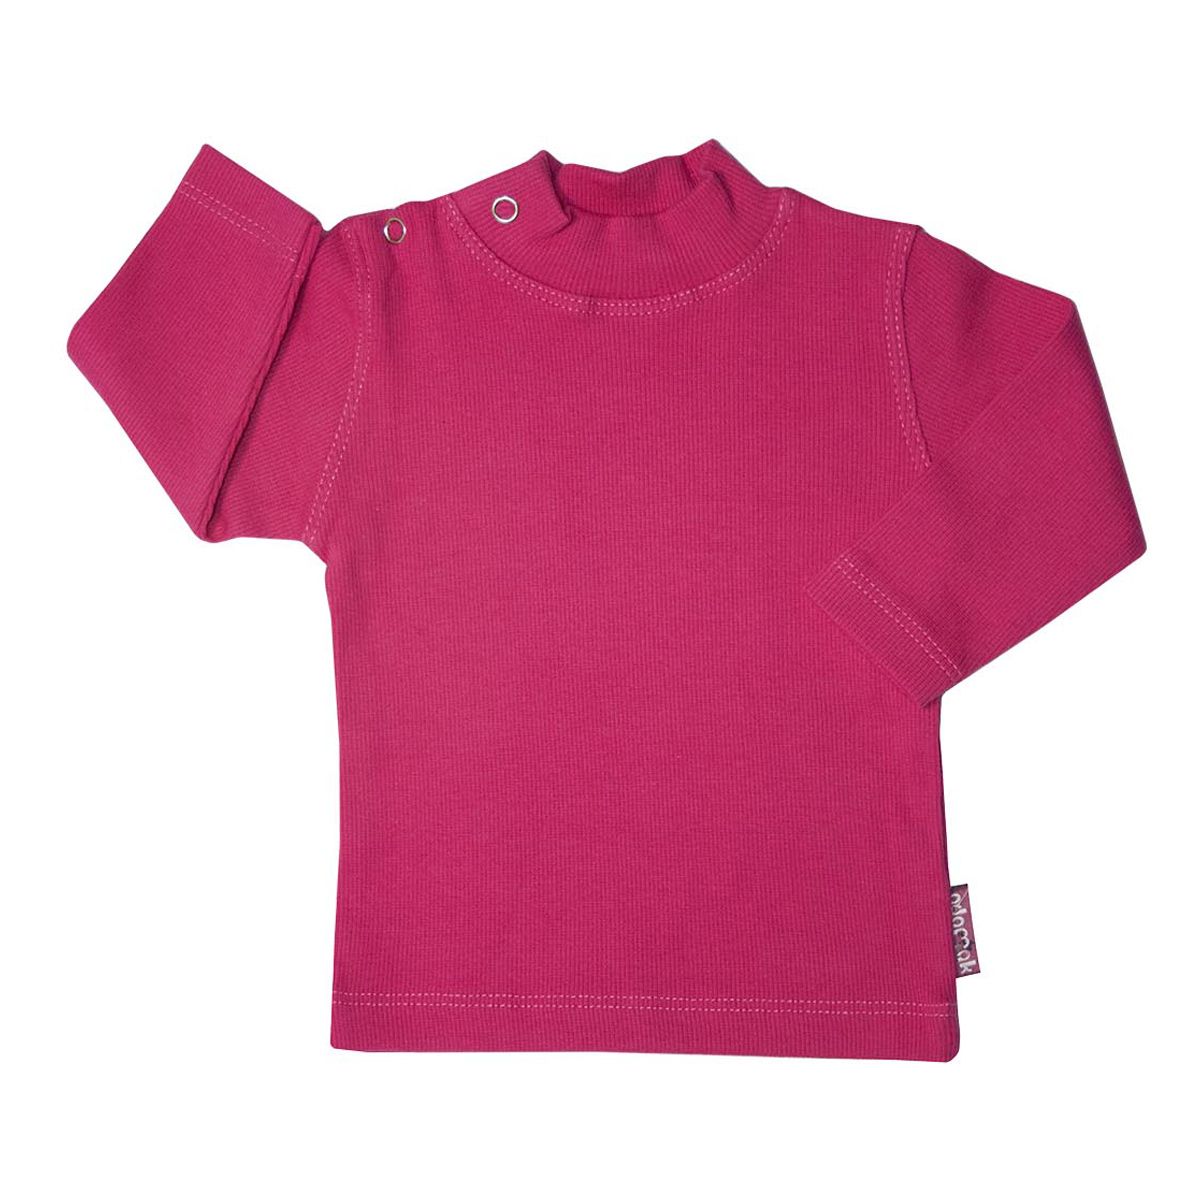 تی شرت آستین بلند نوزادی آدمک کد 145401 رنگ سرخابی -  - 1